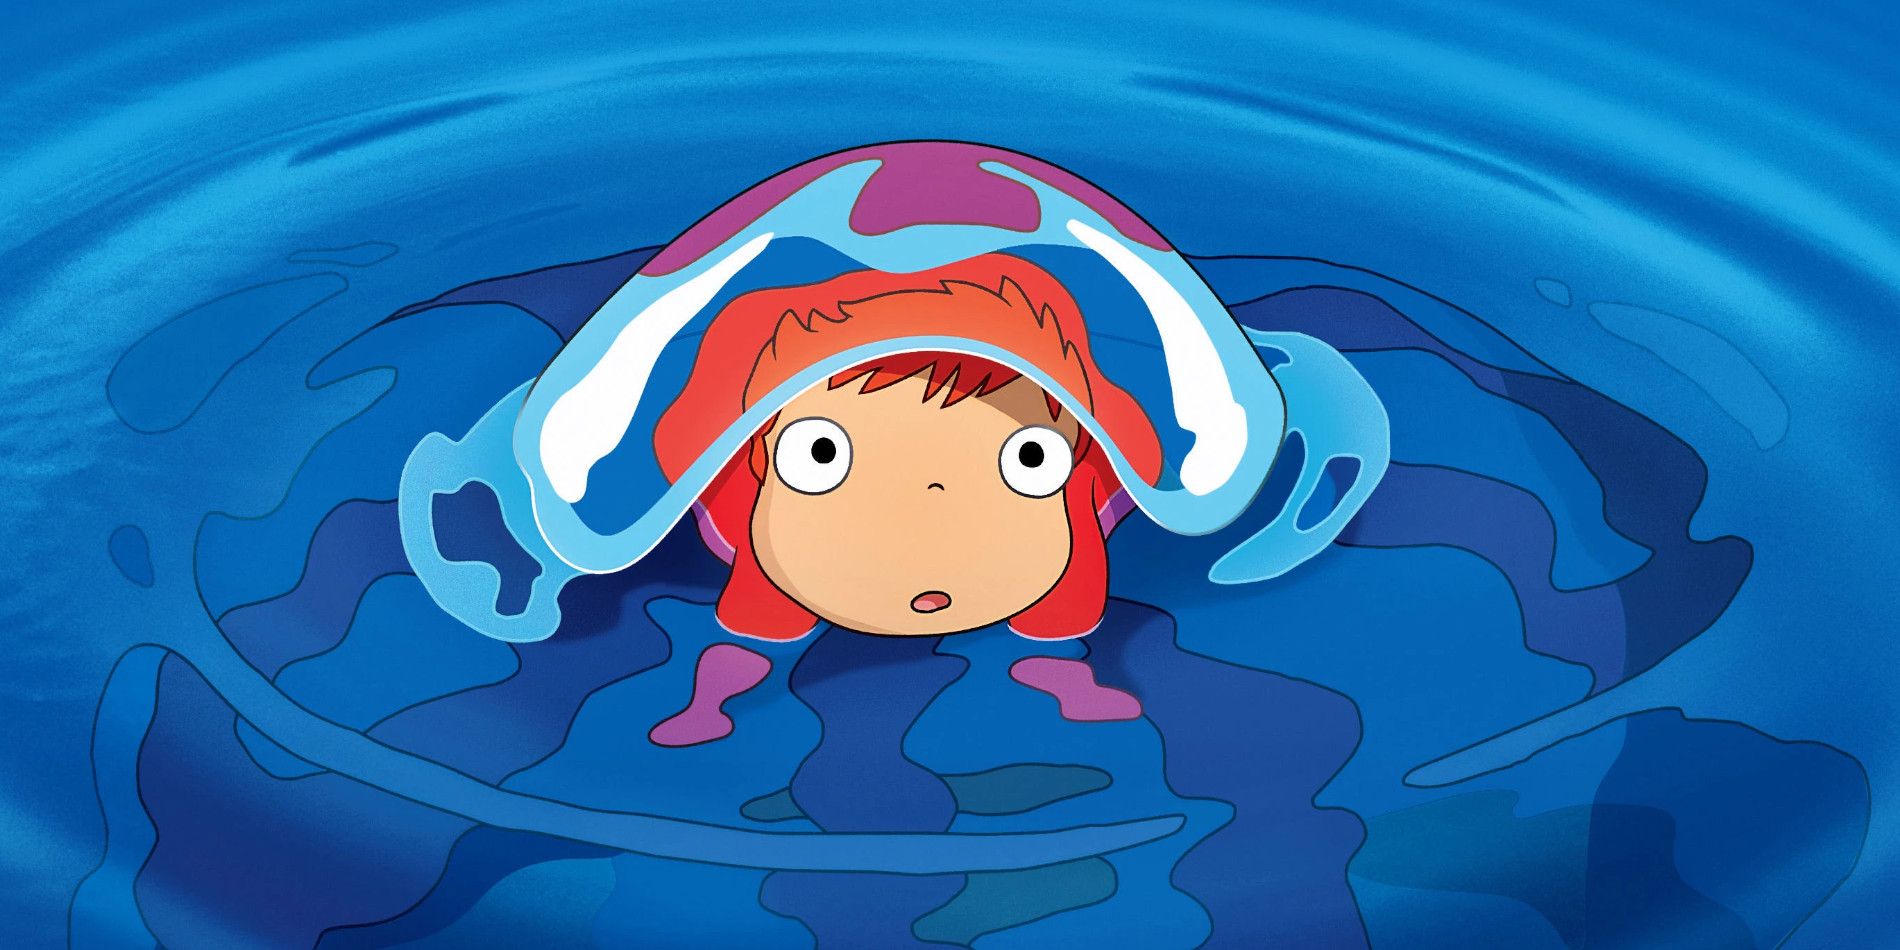 Studio Ghibli's Ponyo - Why We Must Protect the Natural World - YouTube